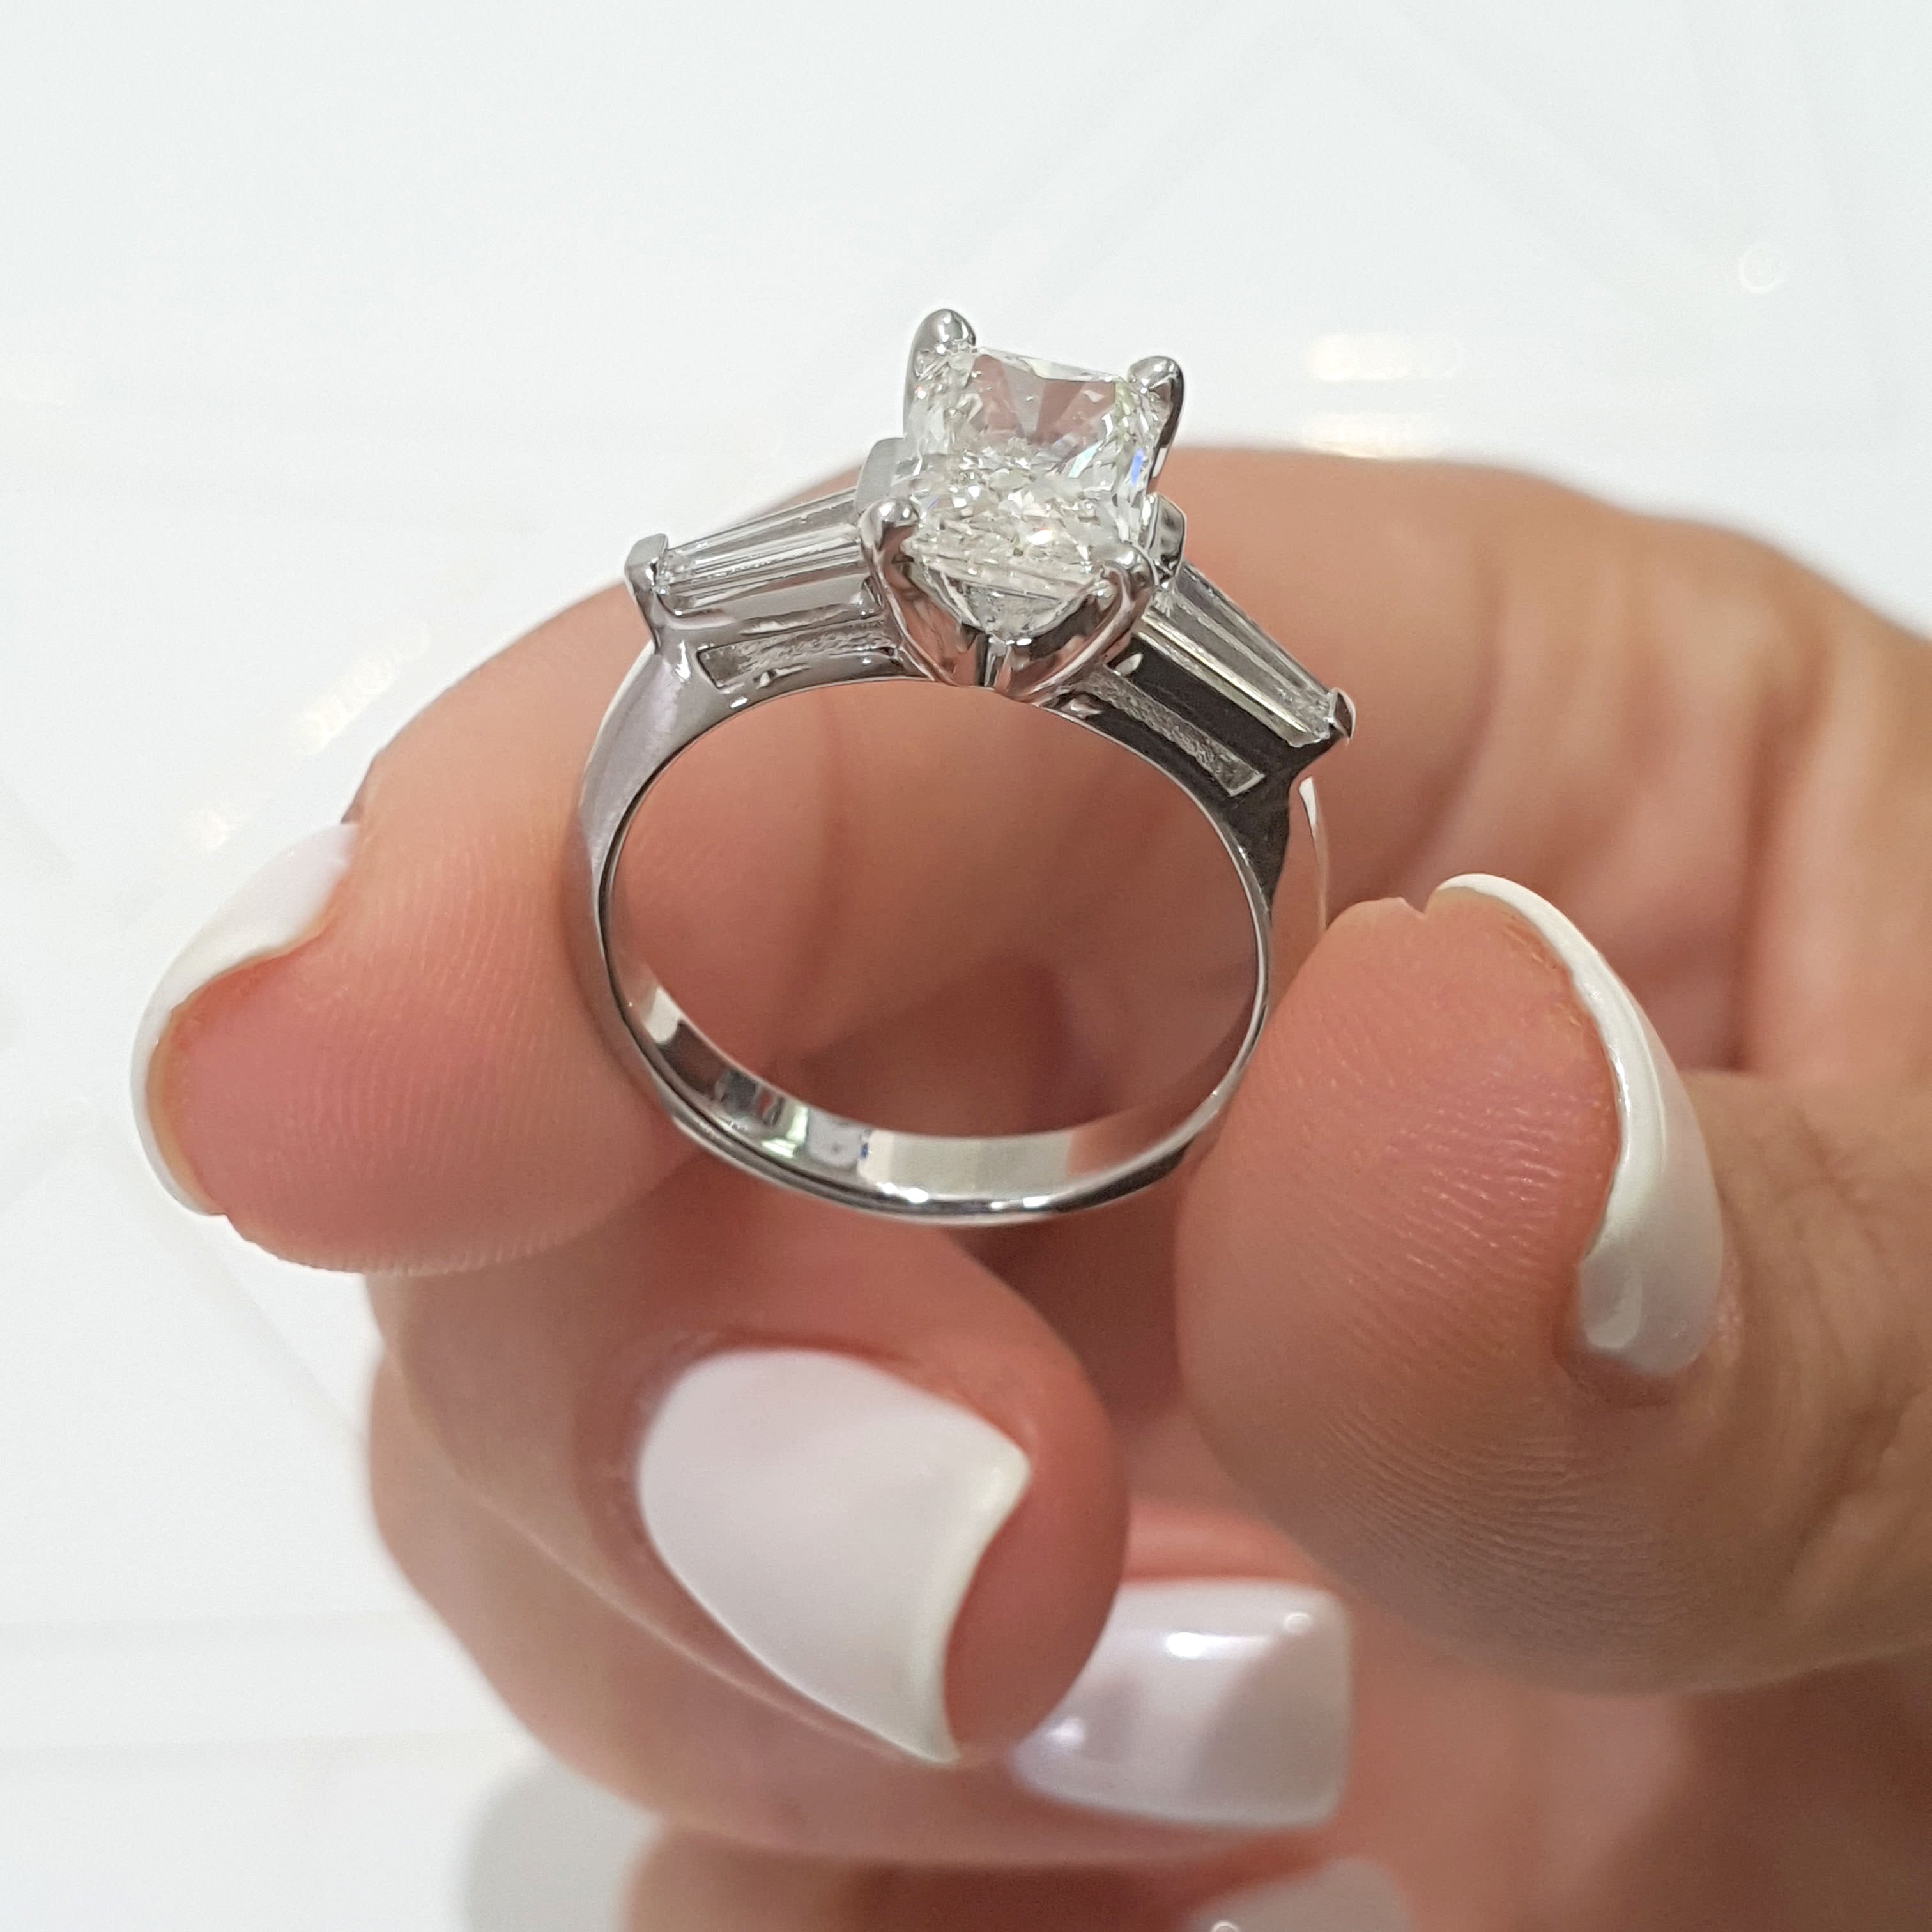 Skylar Diamond Engagement Ring   (1.8 Carat) -14K White Gold